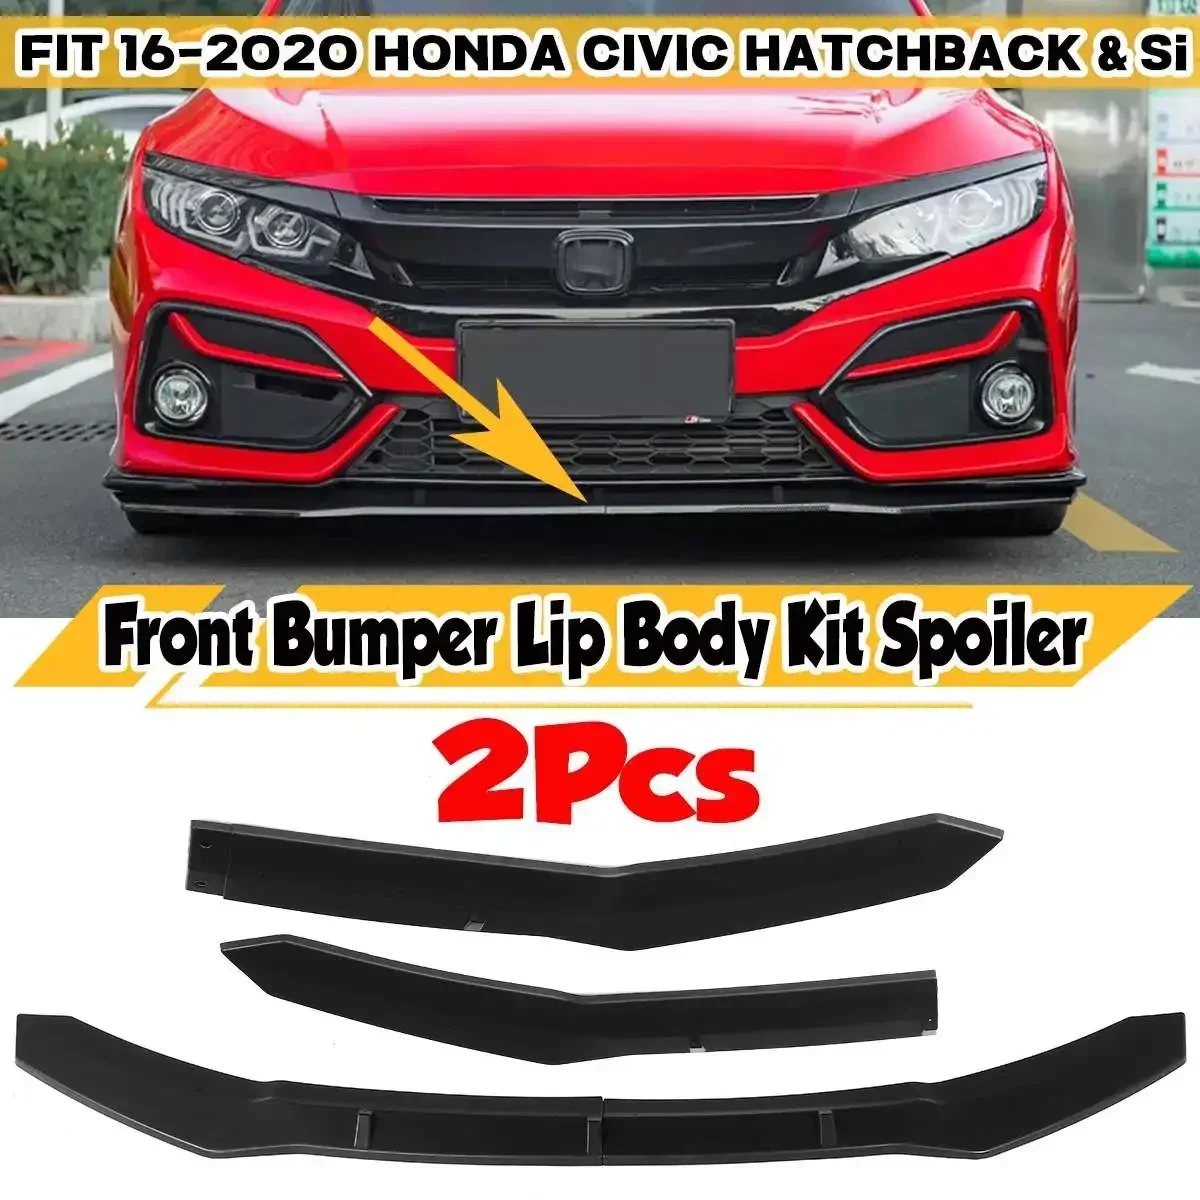 

2PCS Car Front Bumper Splitter Lip Diffuser Spoiler Cover Deflector Lips For Honda For Civic Hatchback & Si 2016-2020 Body Kit